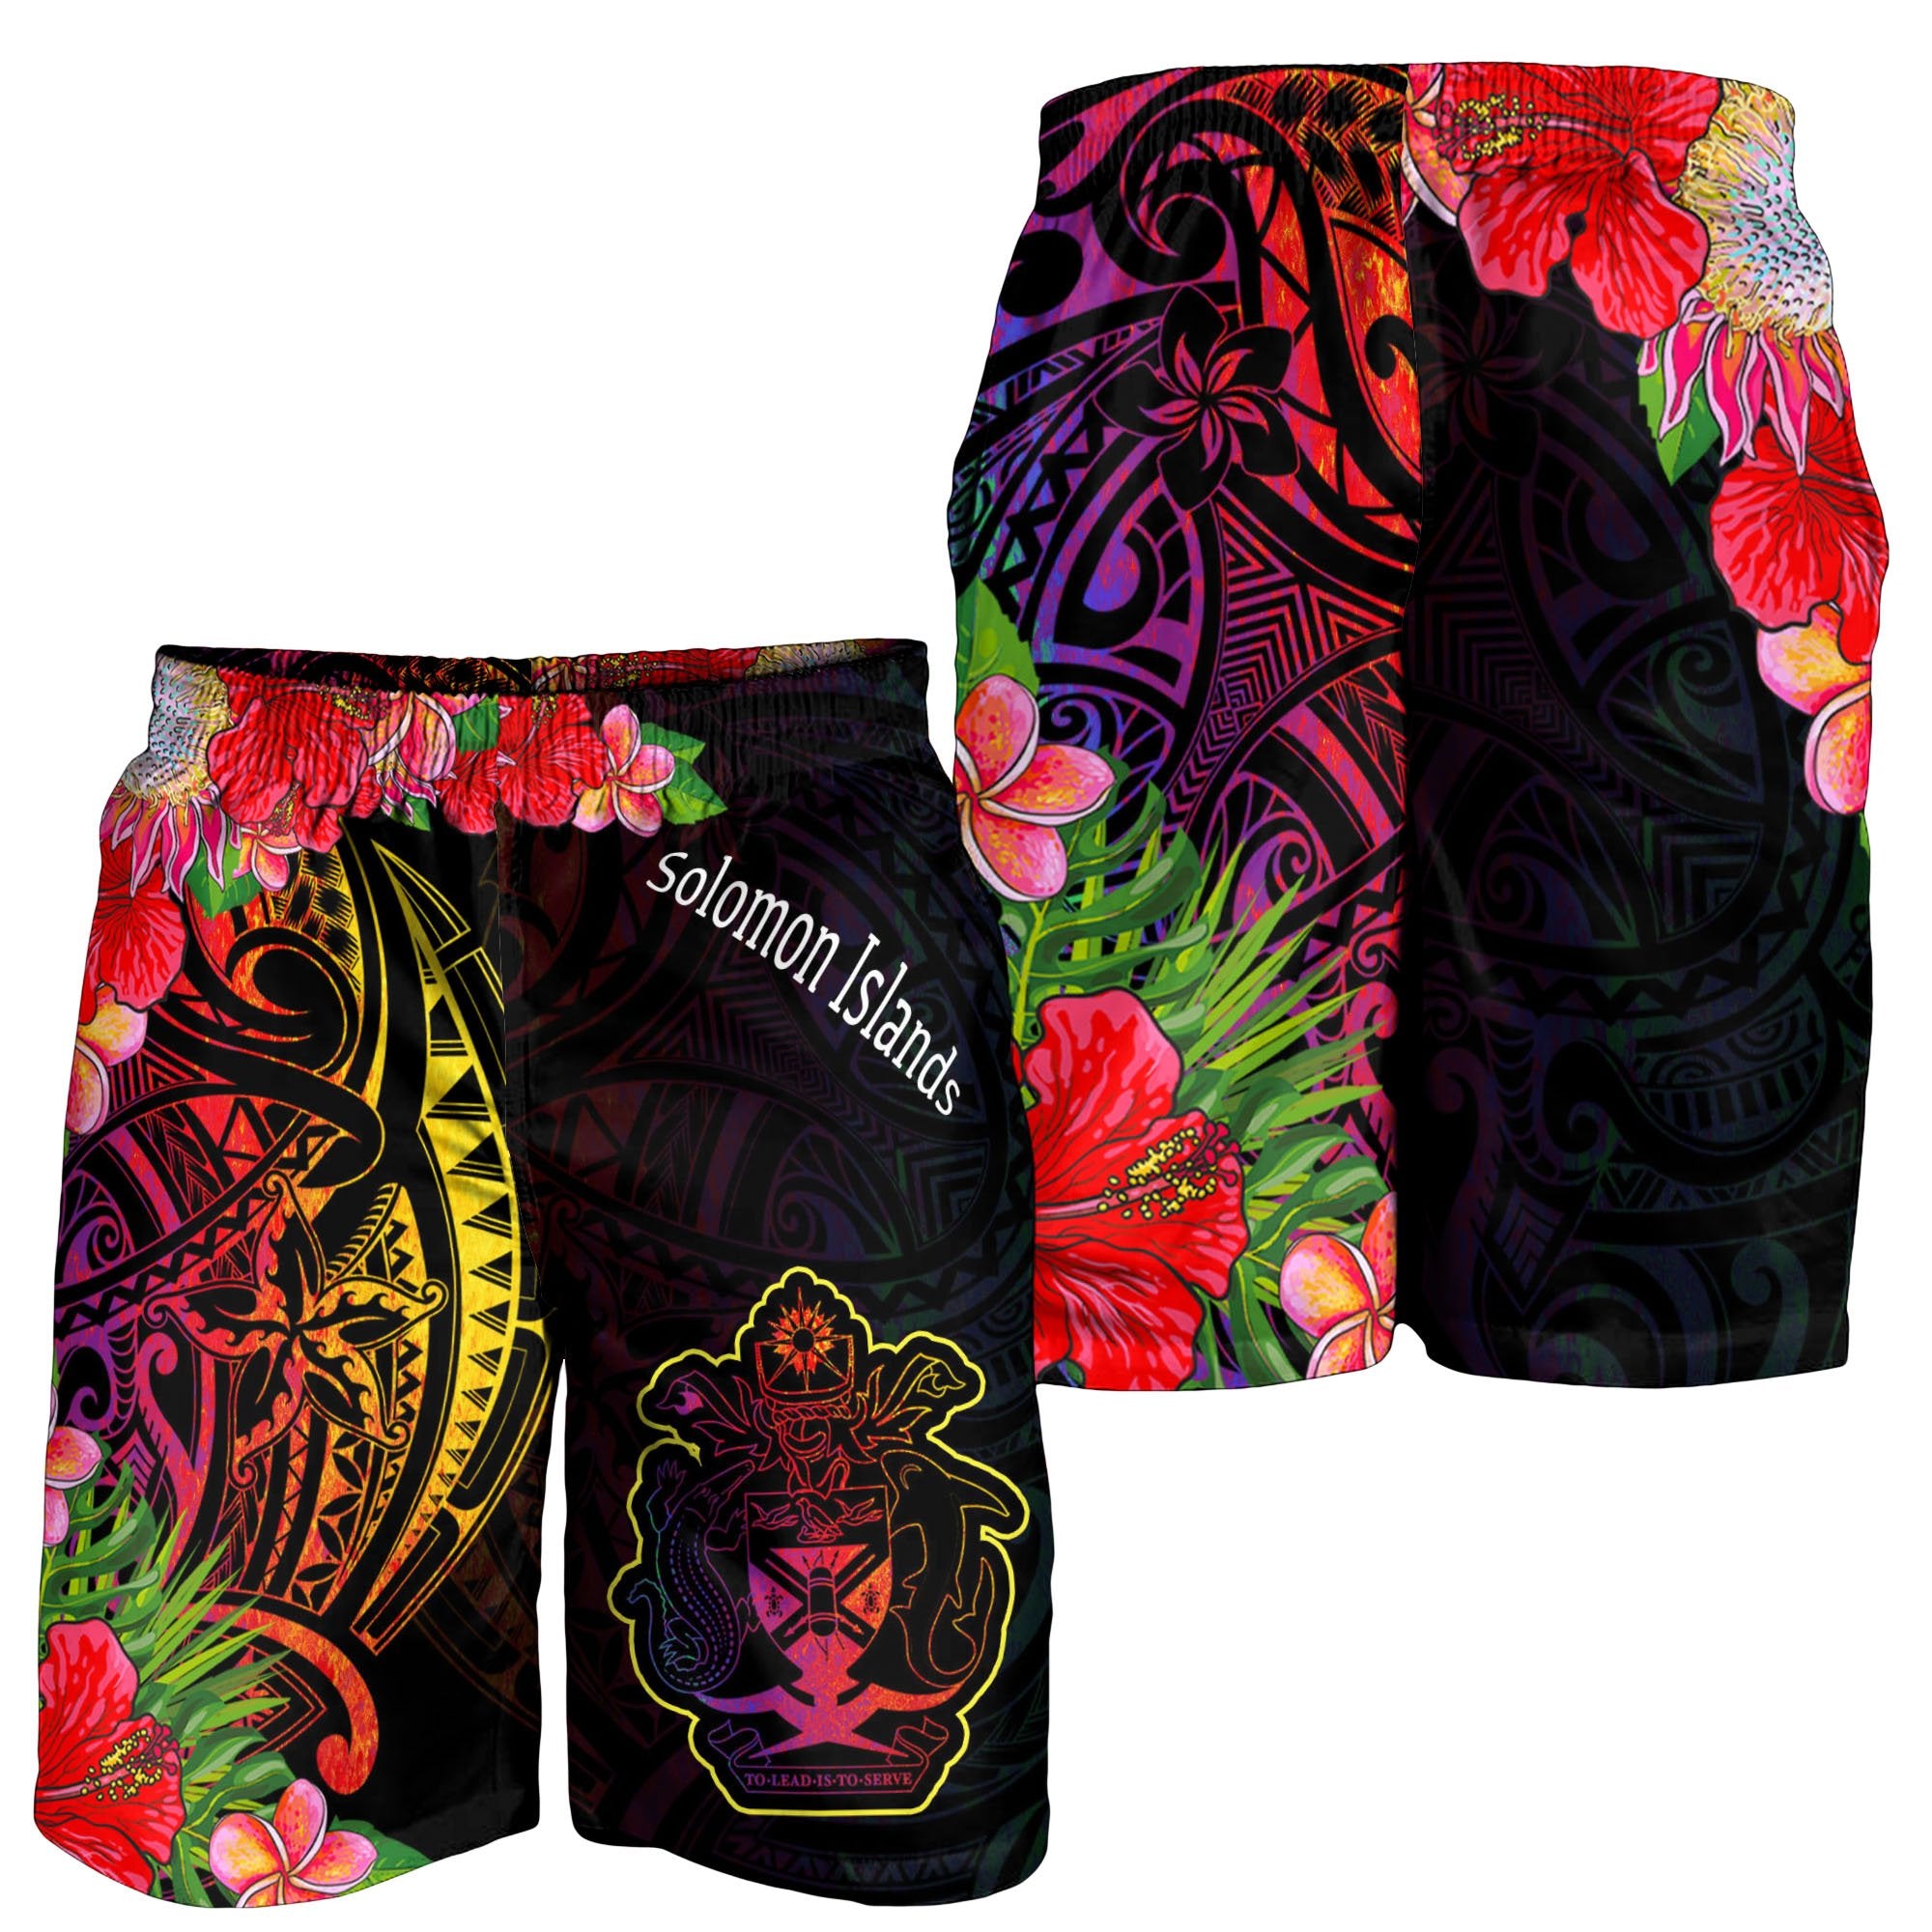 Solomon Islands Men's Shorts - Tropical Hippie Style Black - Polynesian Pride